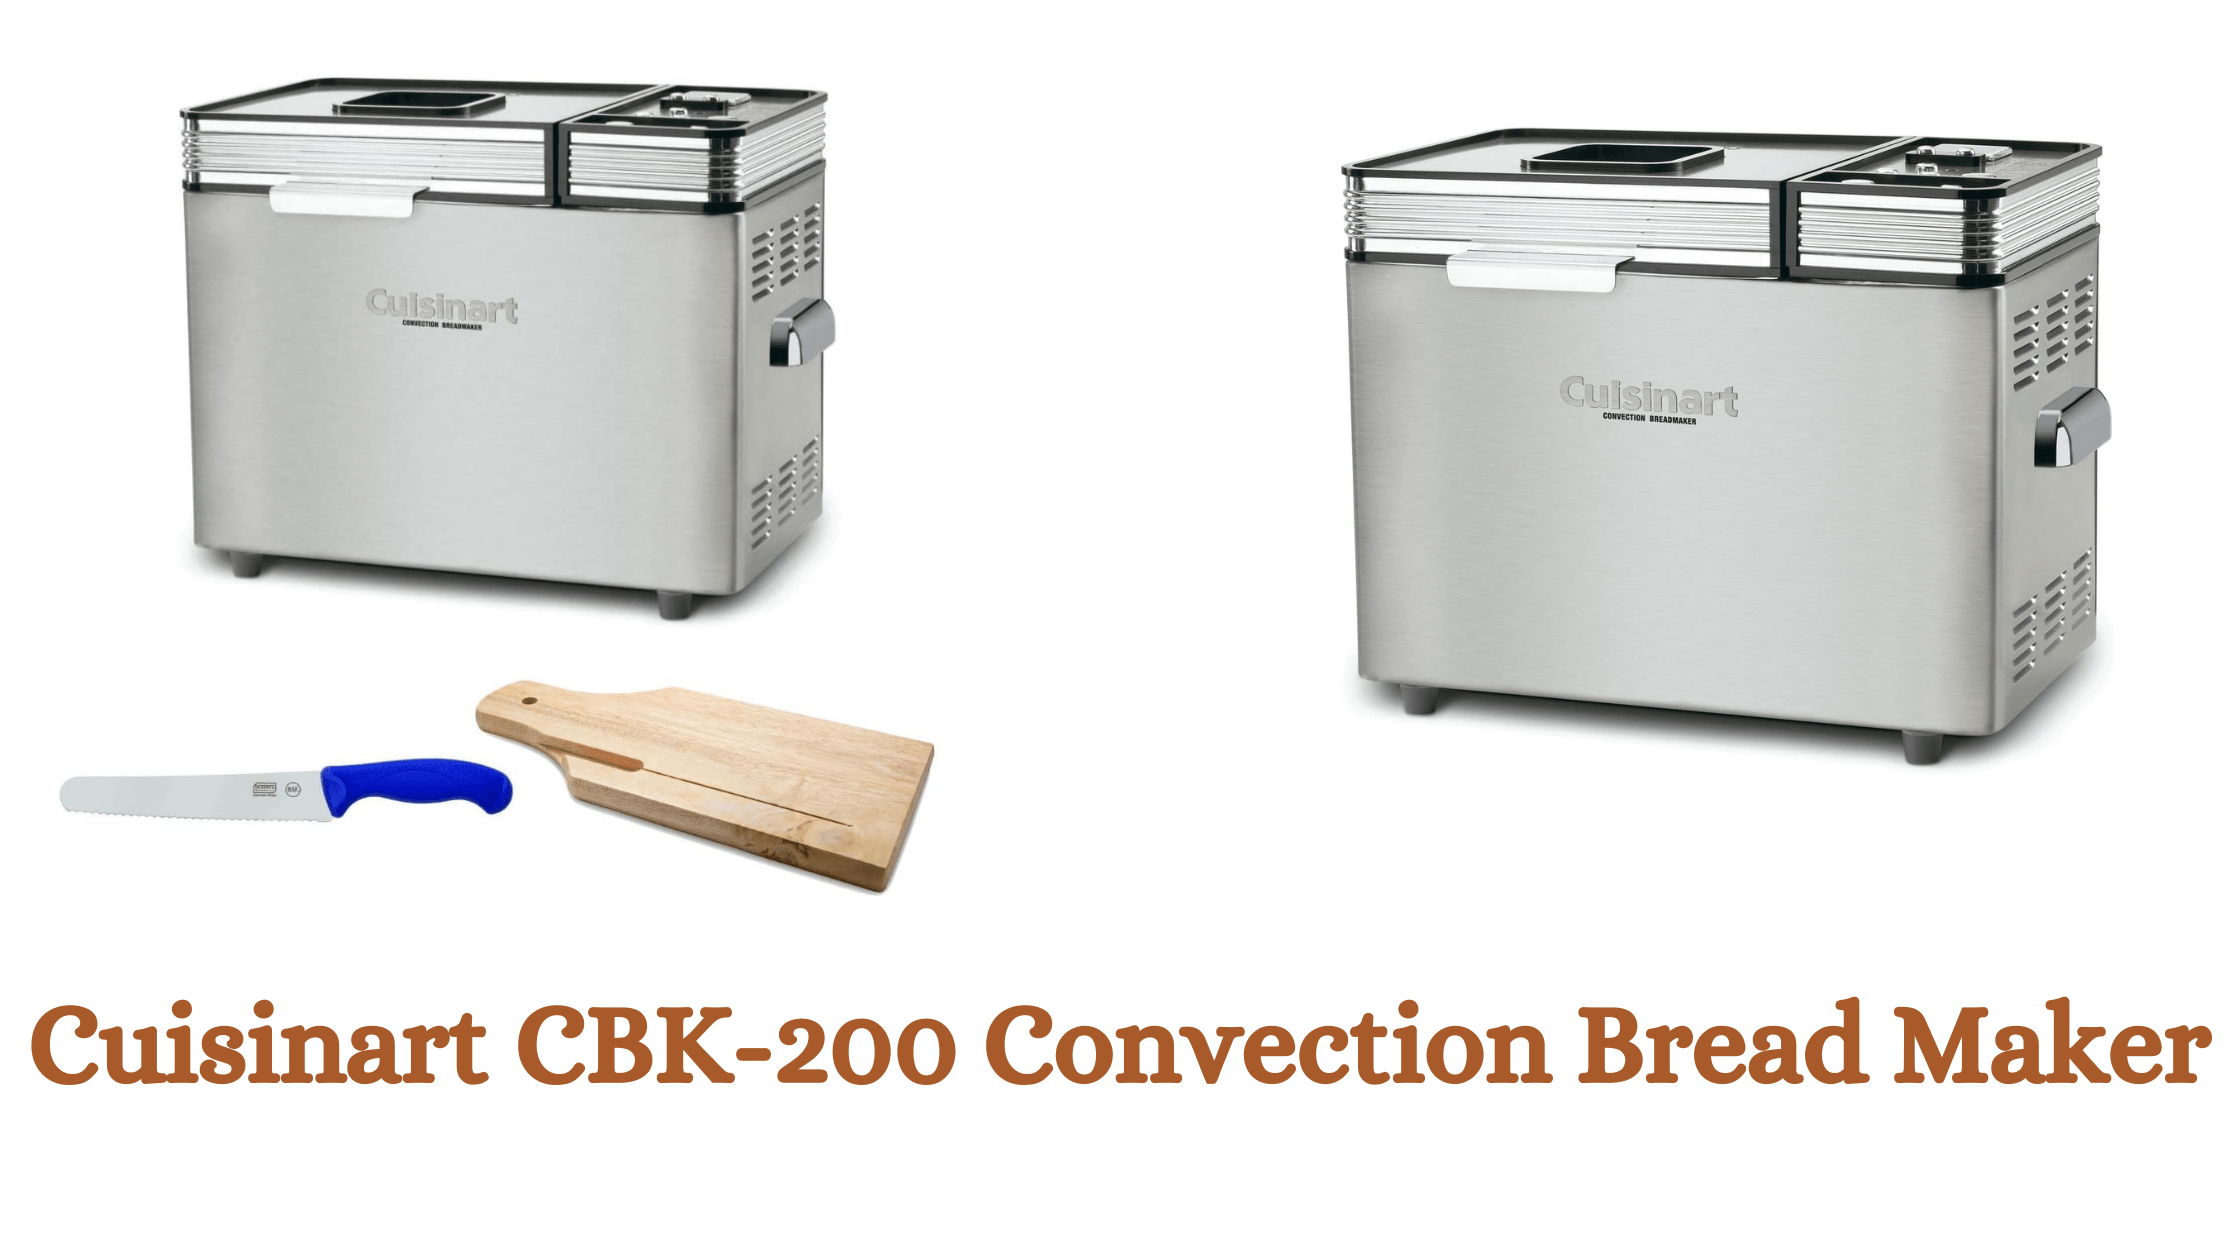 Cuisinart CBK-200 Convection Bread Maker Reviews